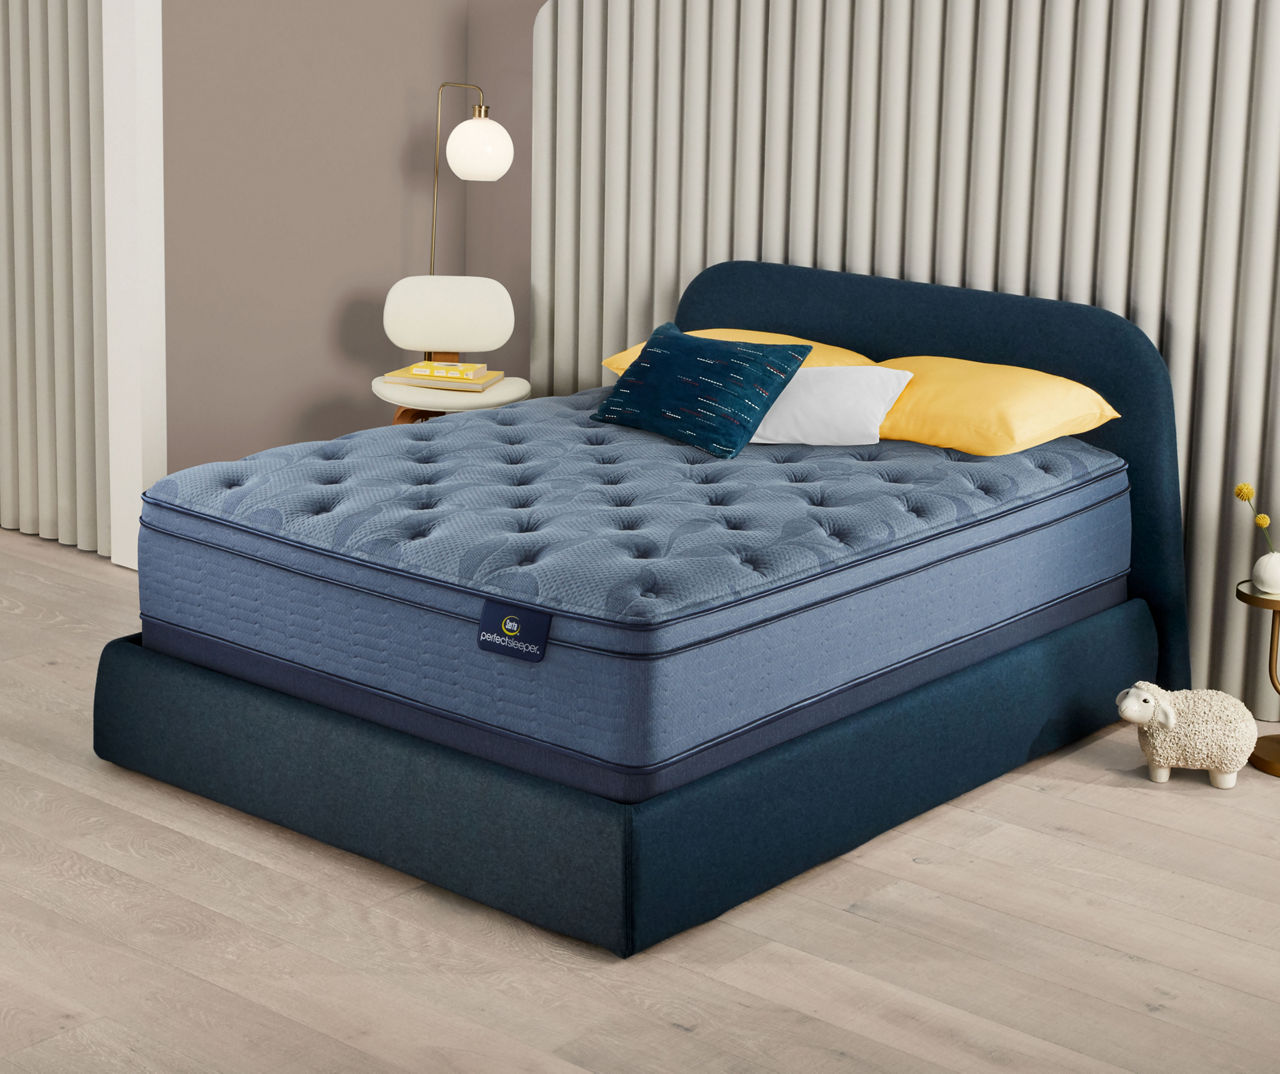 Serta Royal Hills Full Medium Mattress & Box Spring Set, iCollection Perfect Sleeper